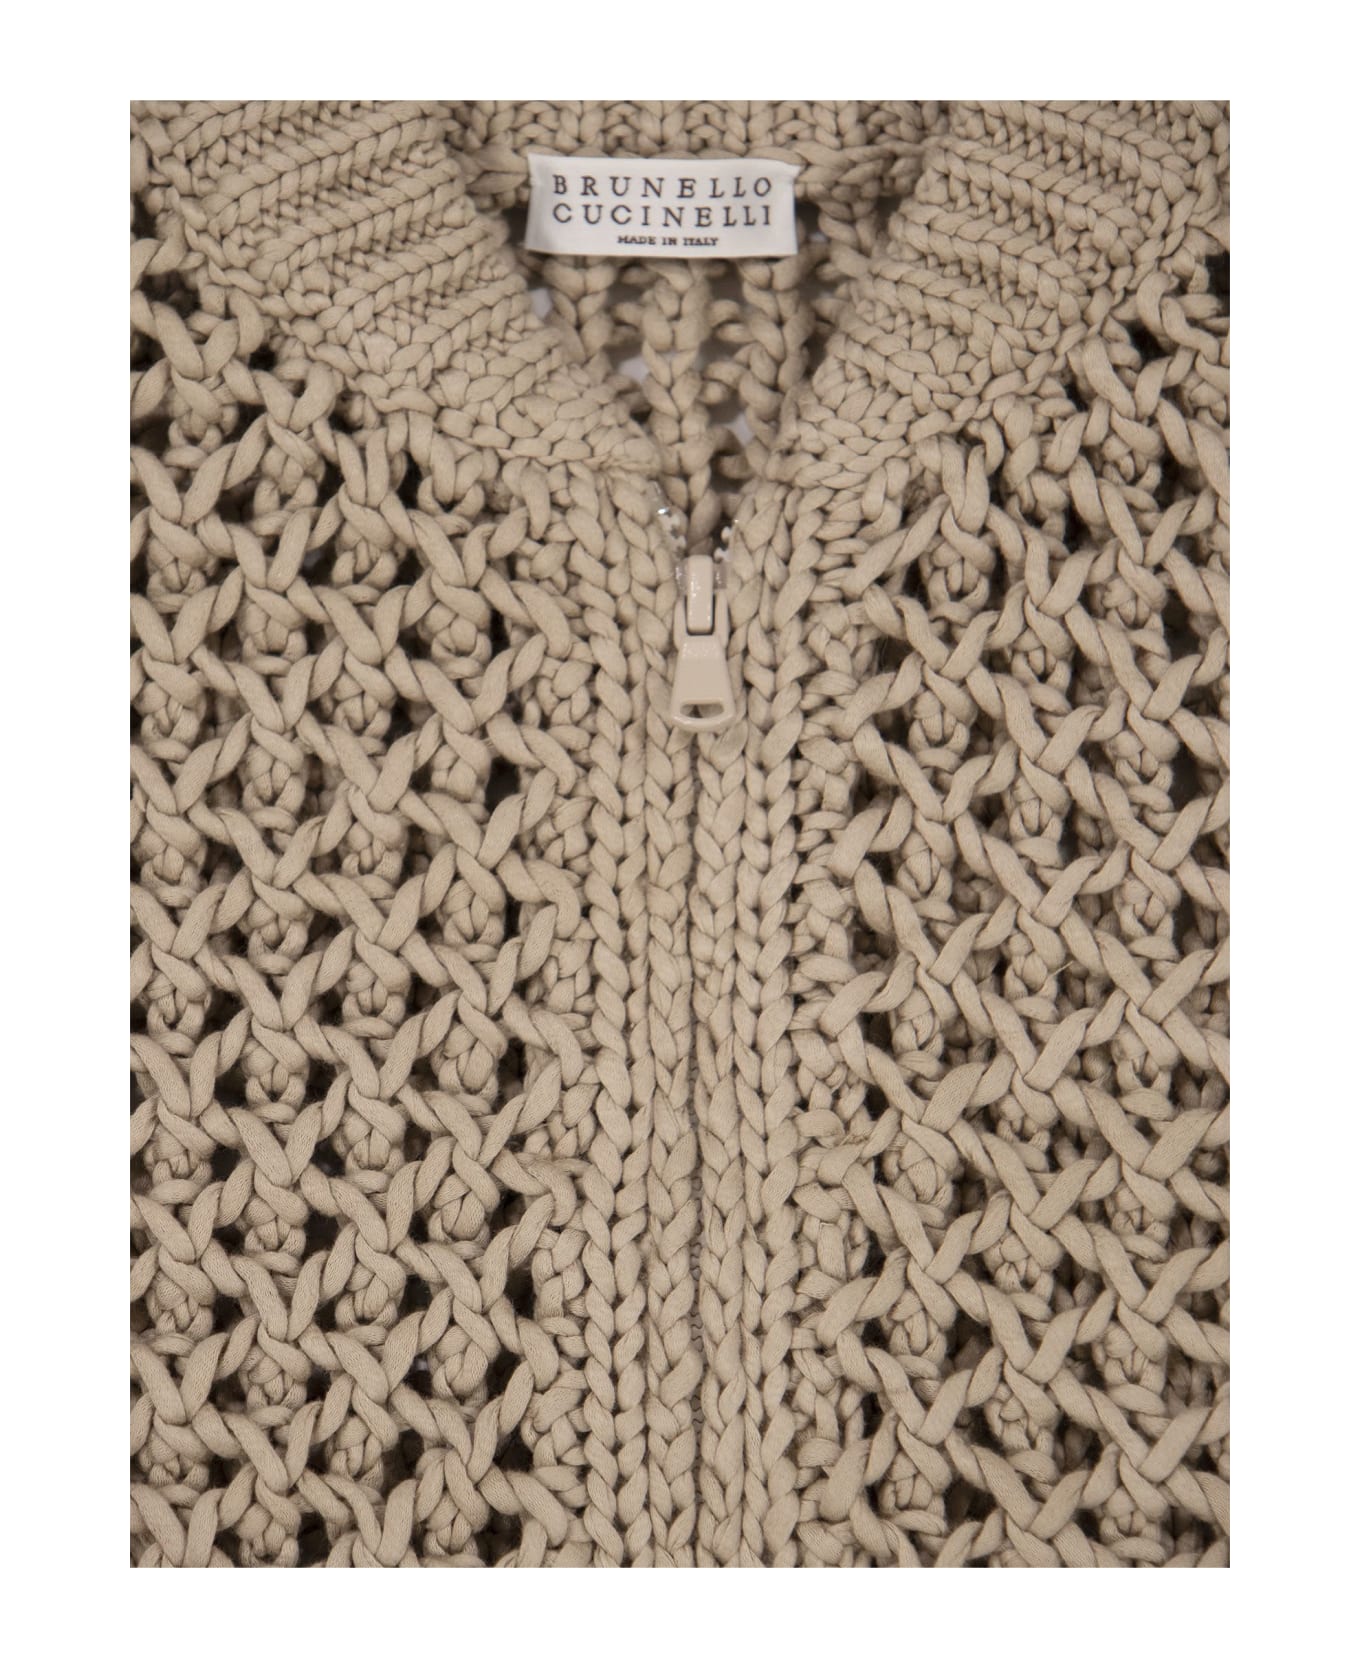 Brunello Cucinelli Cotton Crochet Cardigan - Camel